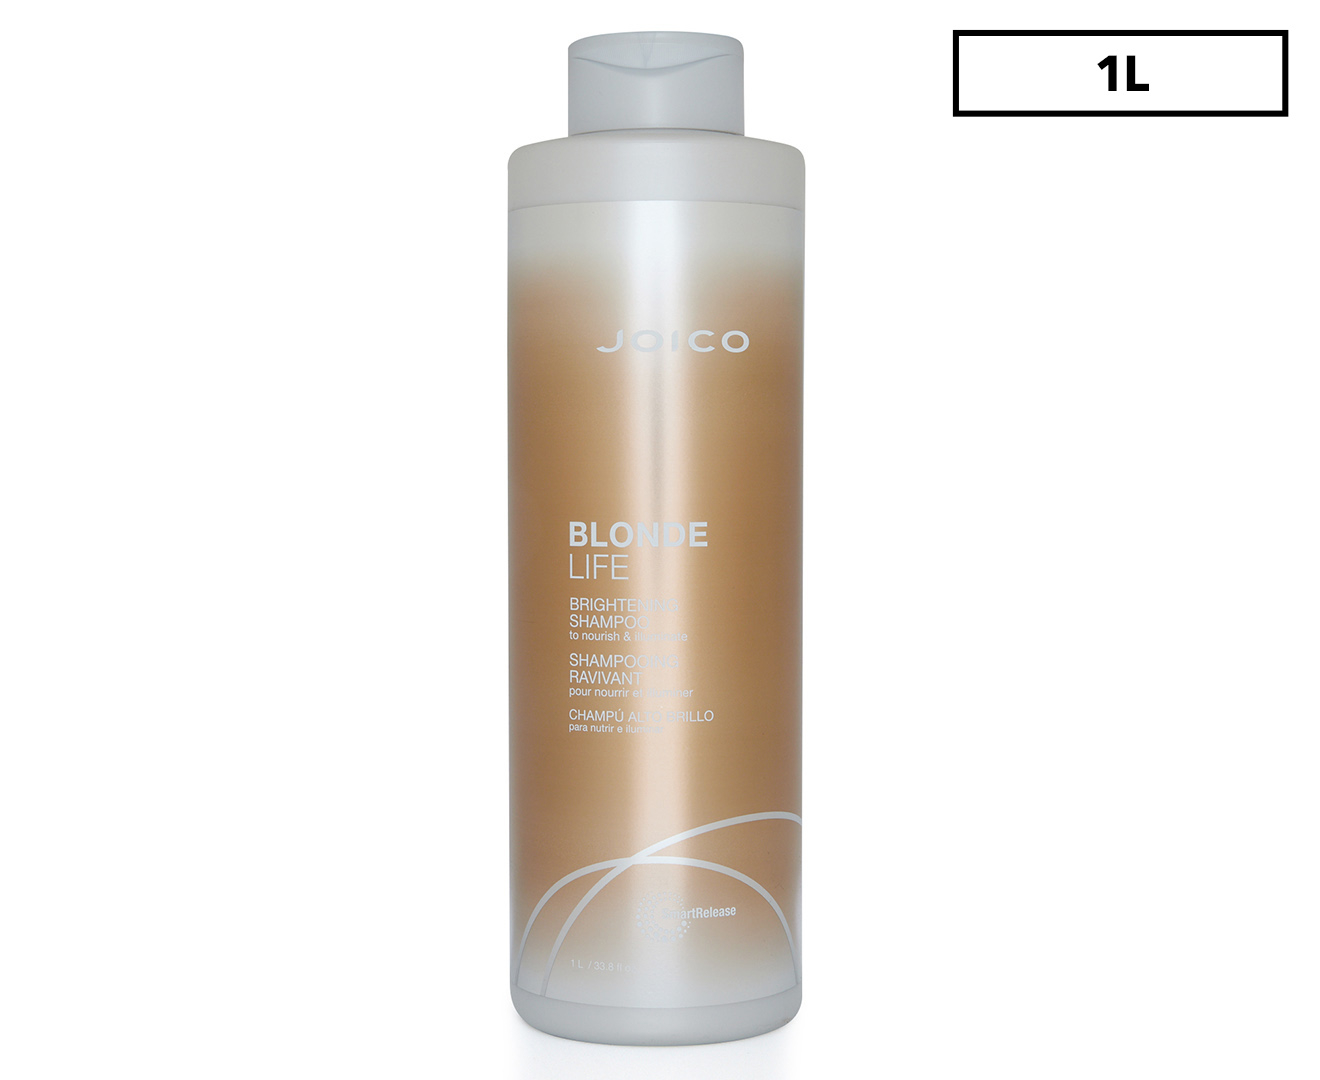 Joico Blonde Life Brightening Shampoo - wide 7